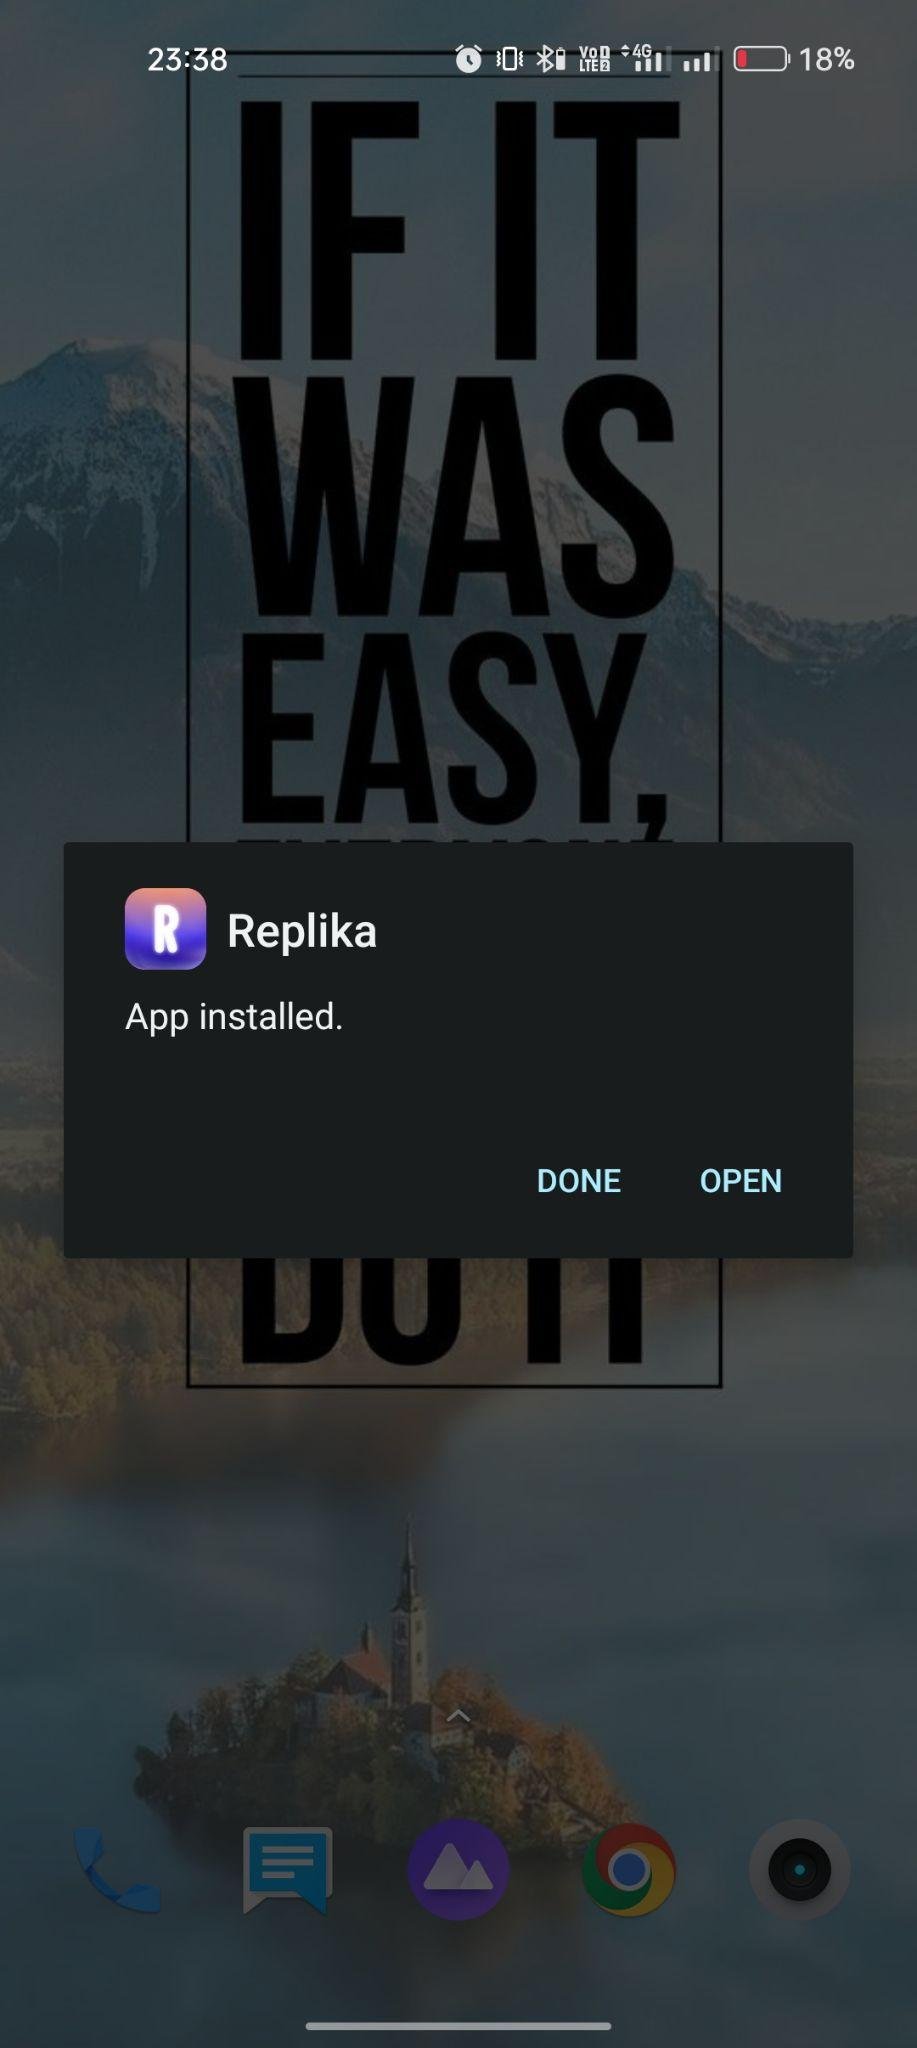 Replika apk installed